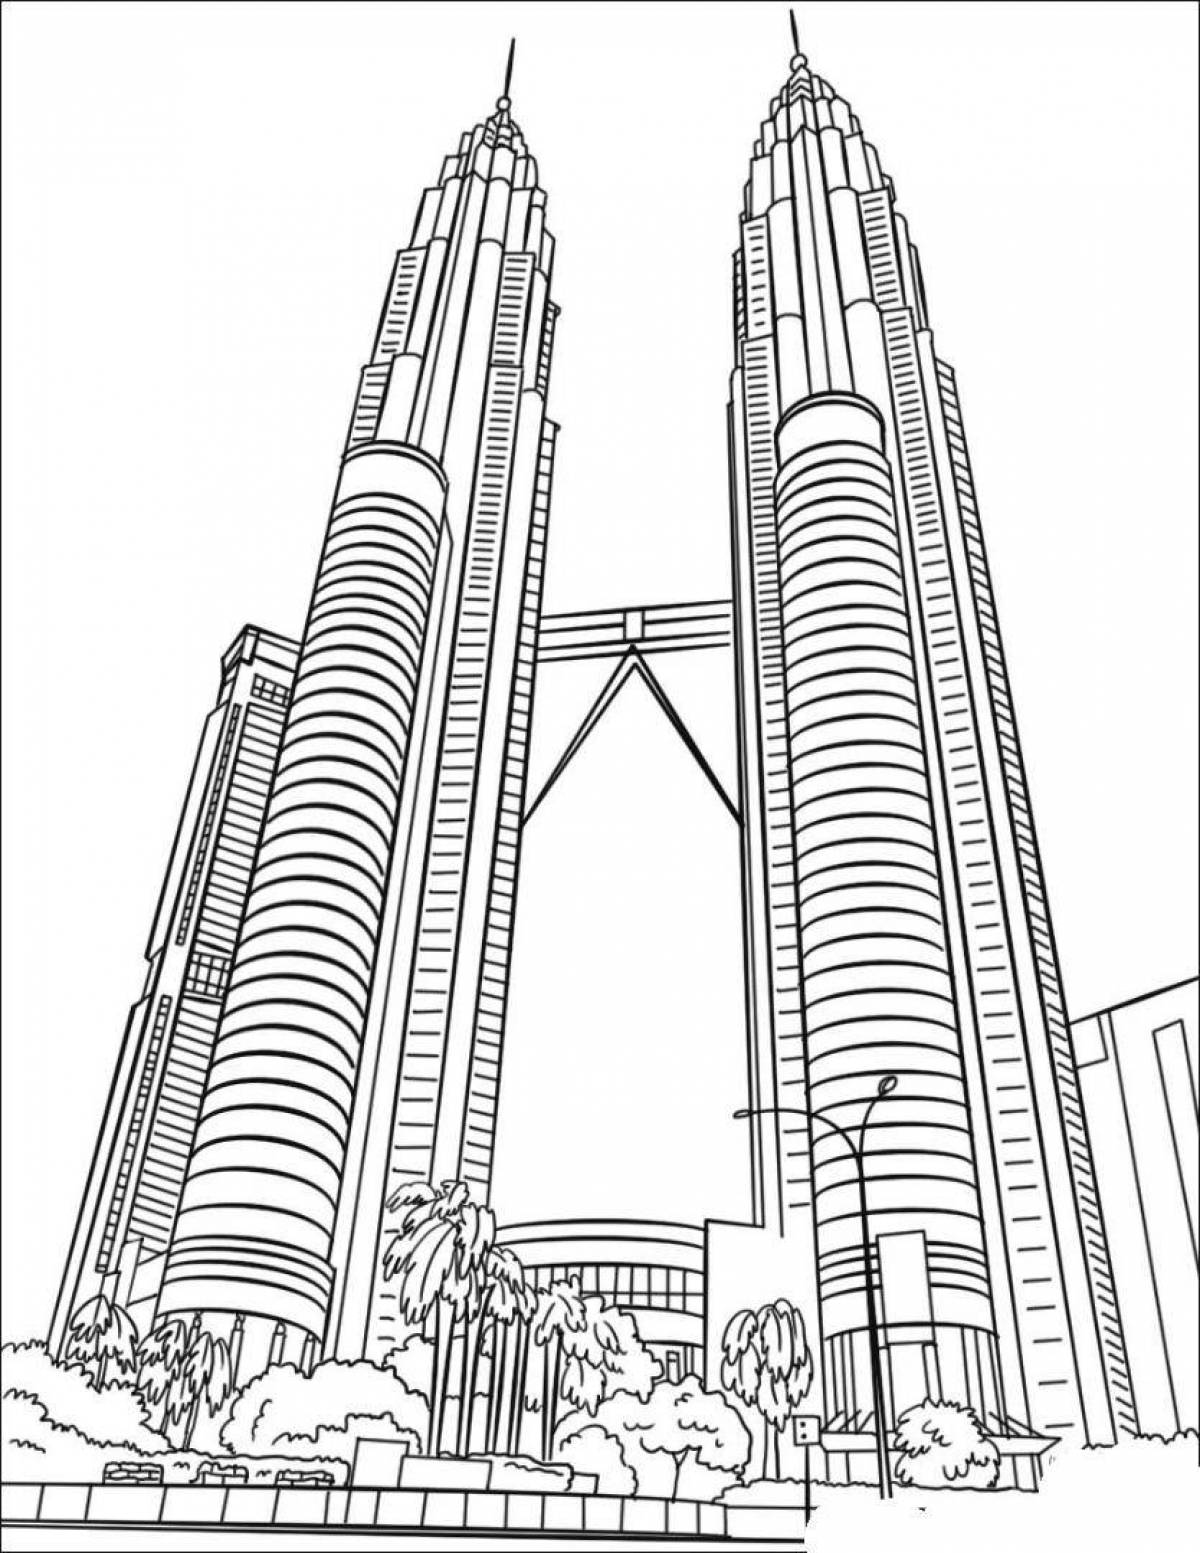 A fun skyscraper coloring book for kids